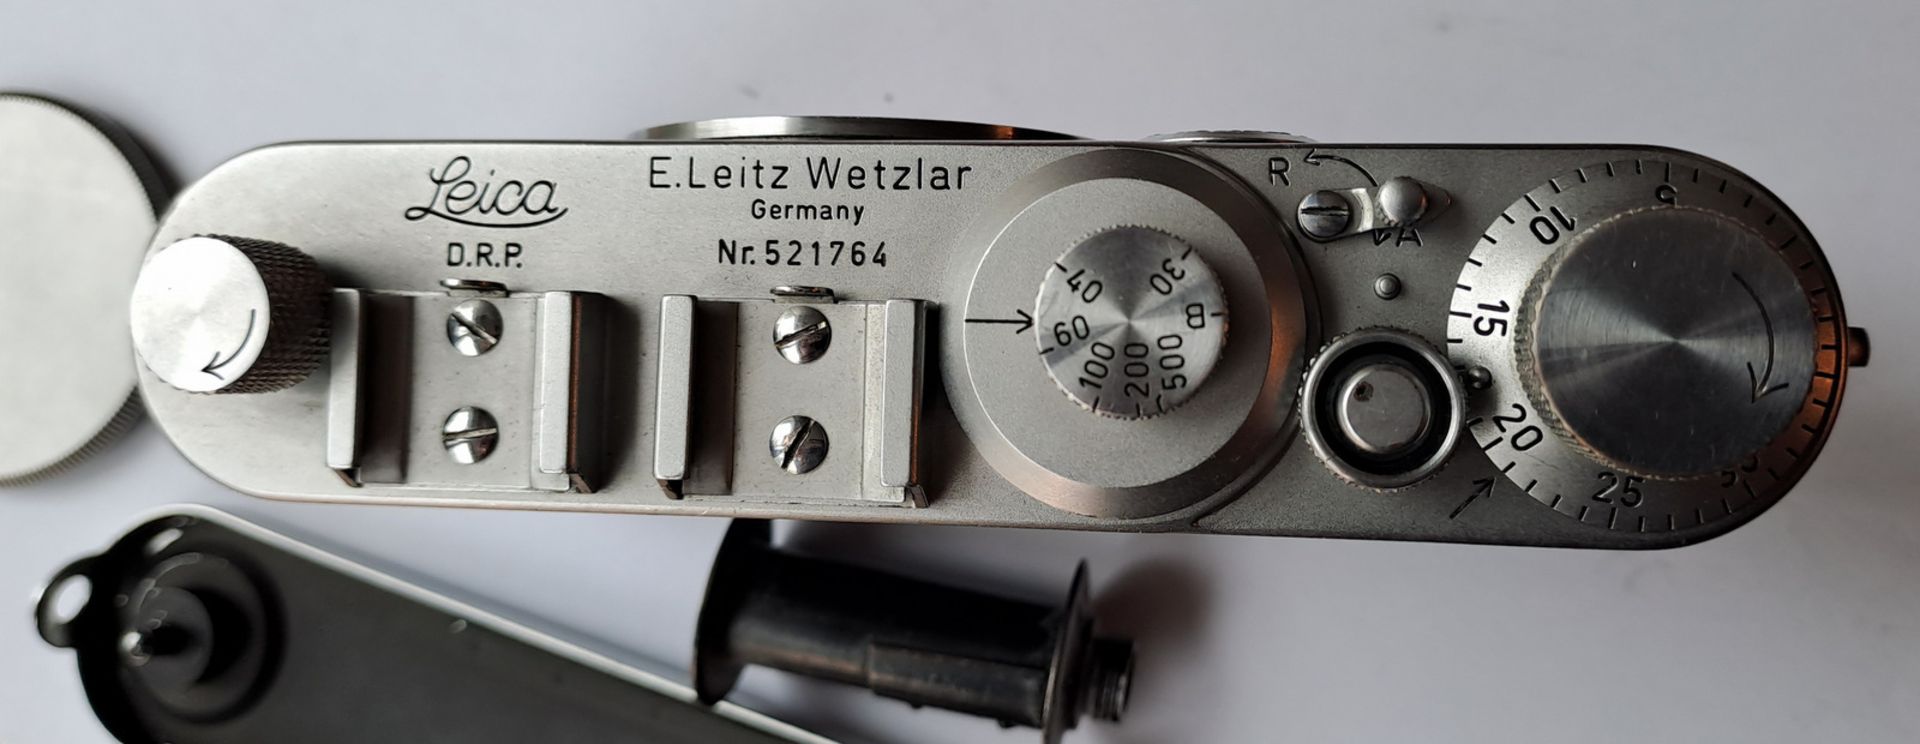 Rare Leitz Wetzlar Leica I Model C (Ic) (1950-51) Body & Lens Cover - Image 6 of 9